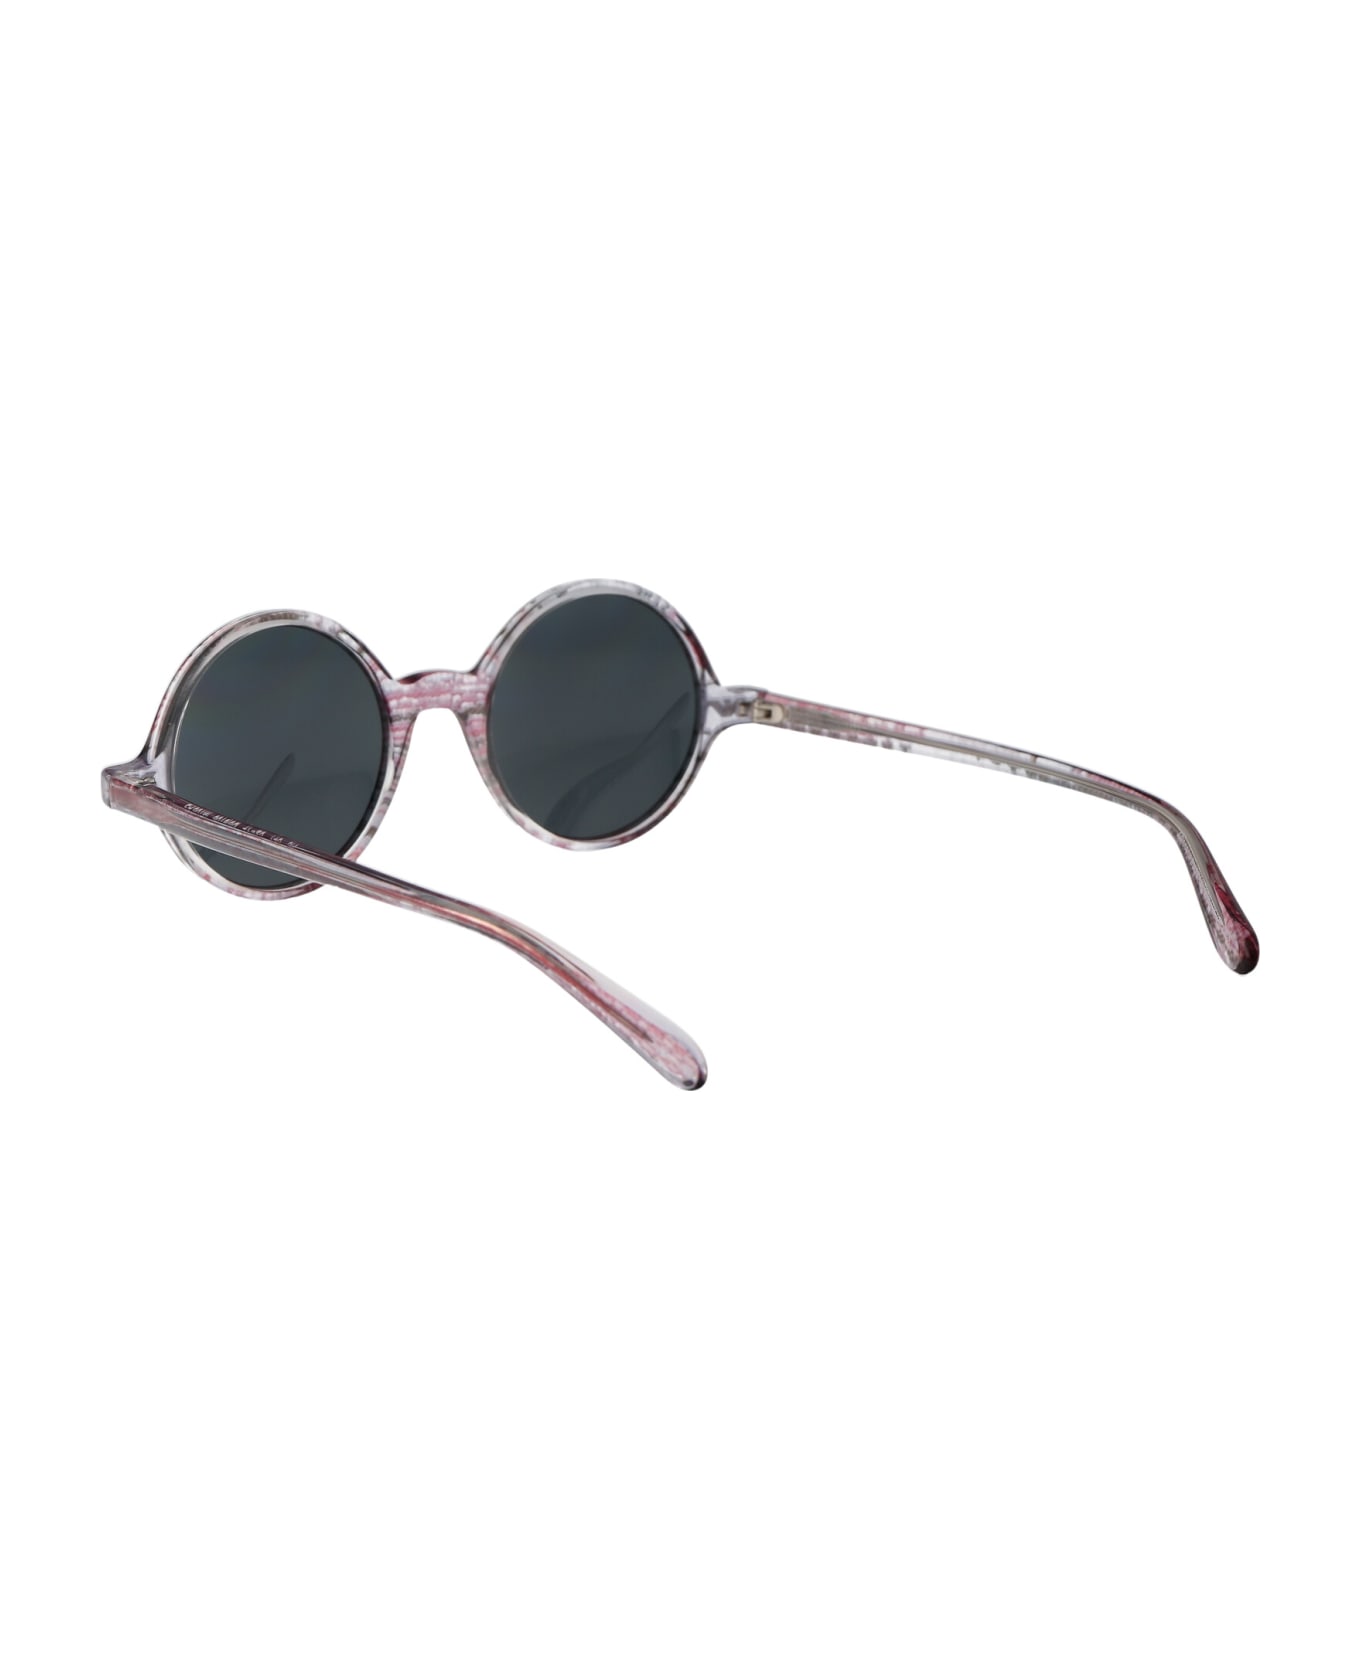 Emporio Armani 0ea 501m Sunglasses - 60196G Crystal Pink Pattern